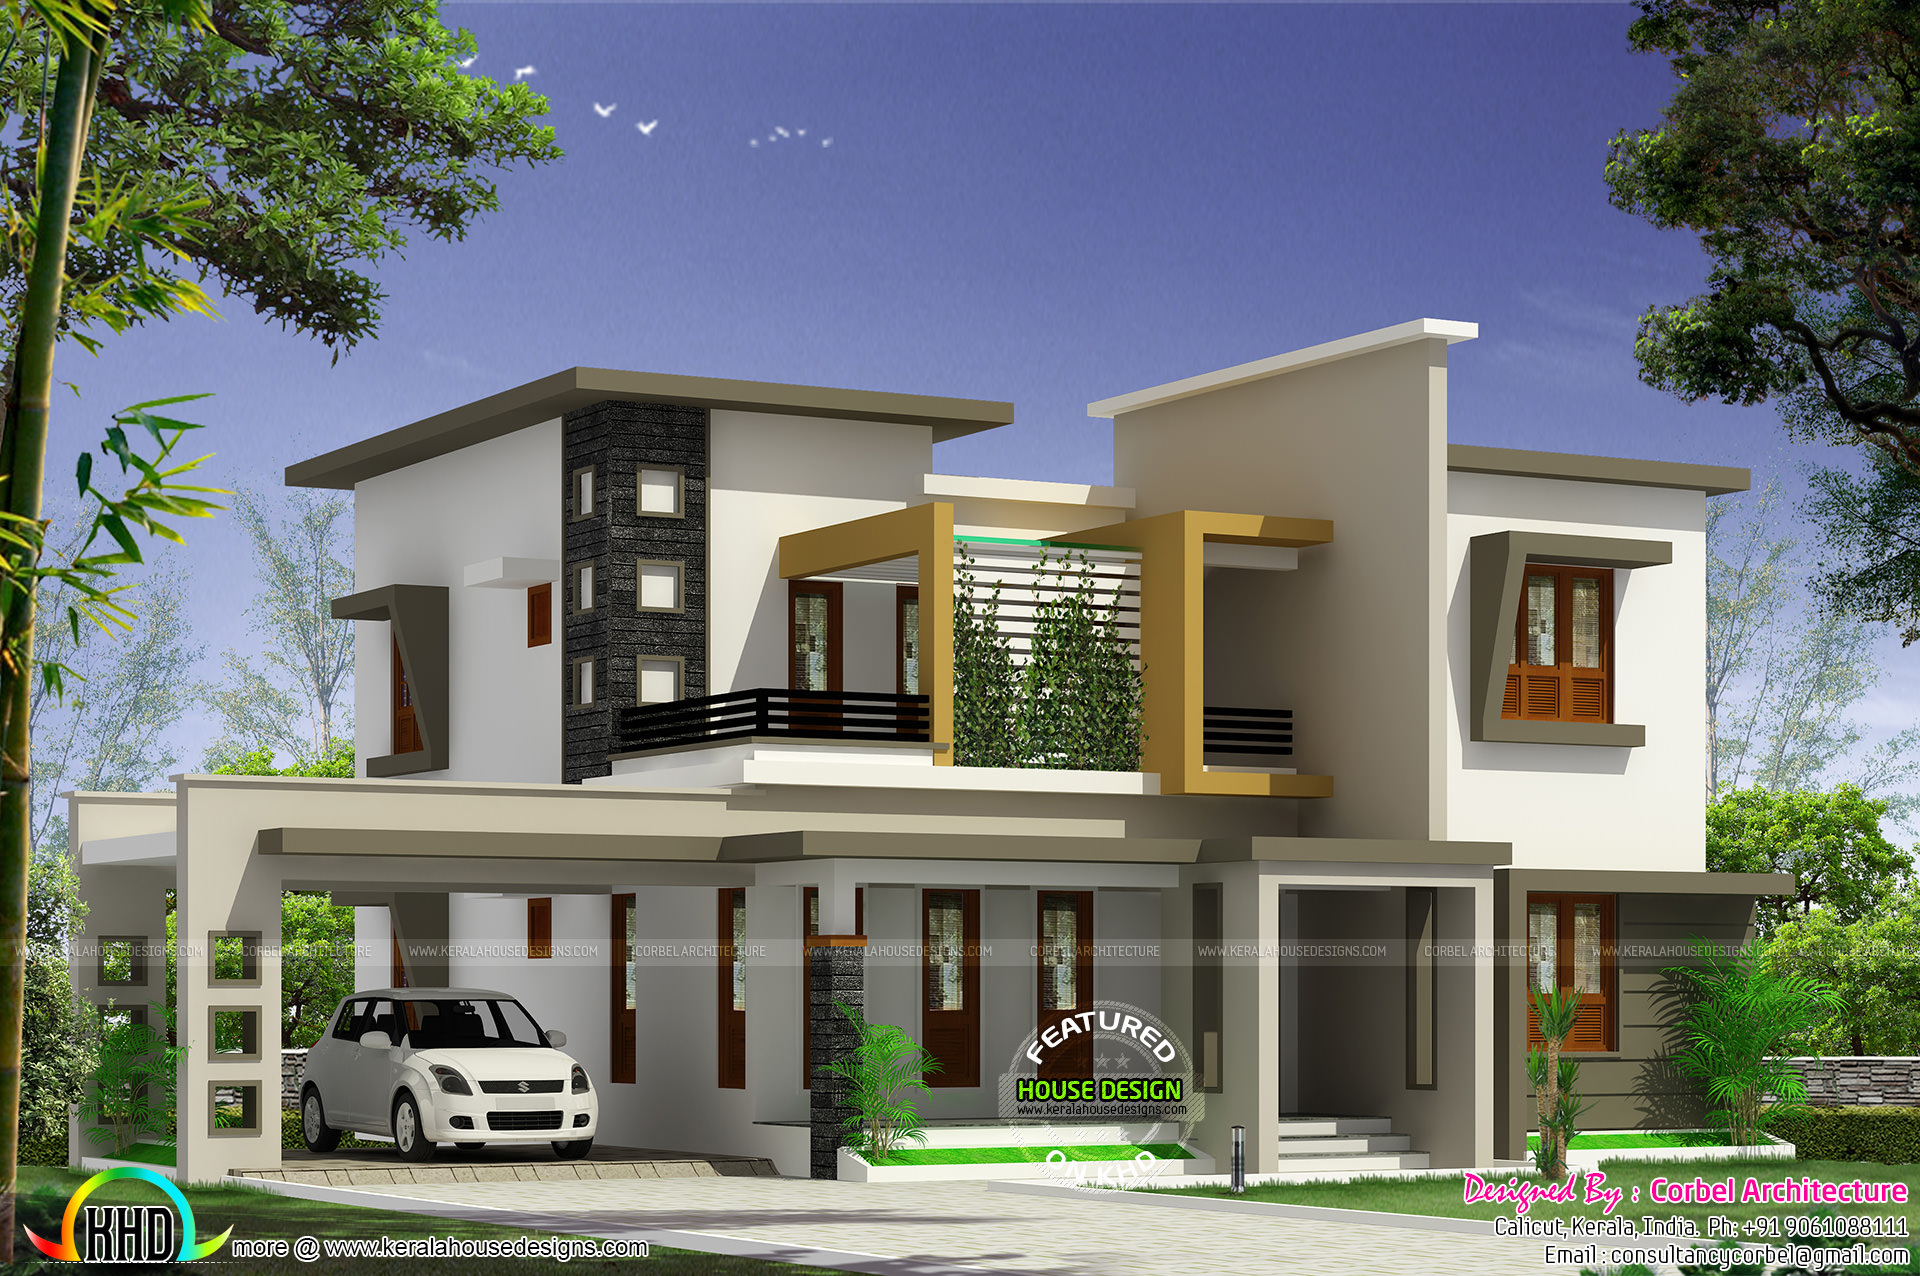 Kerala New House Model